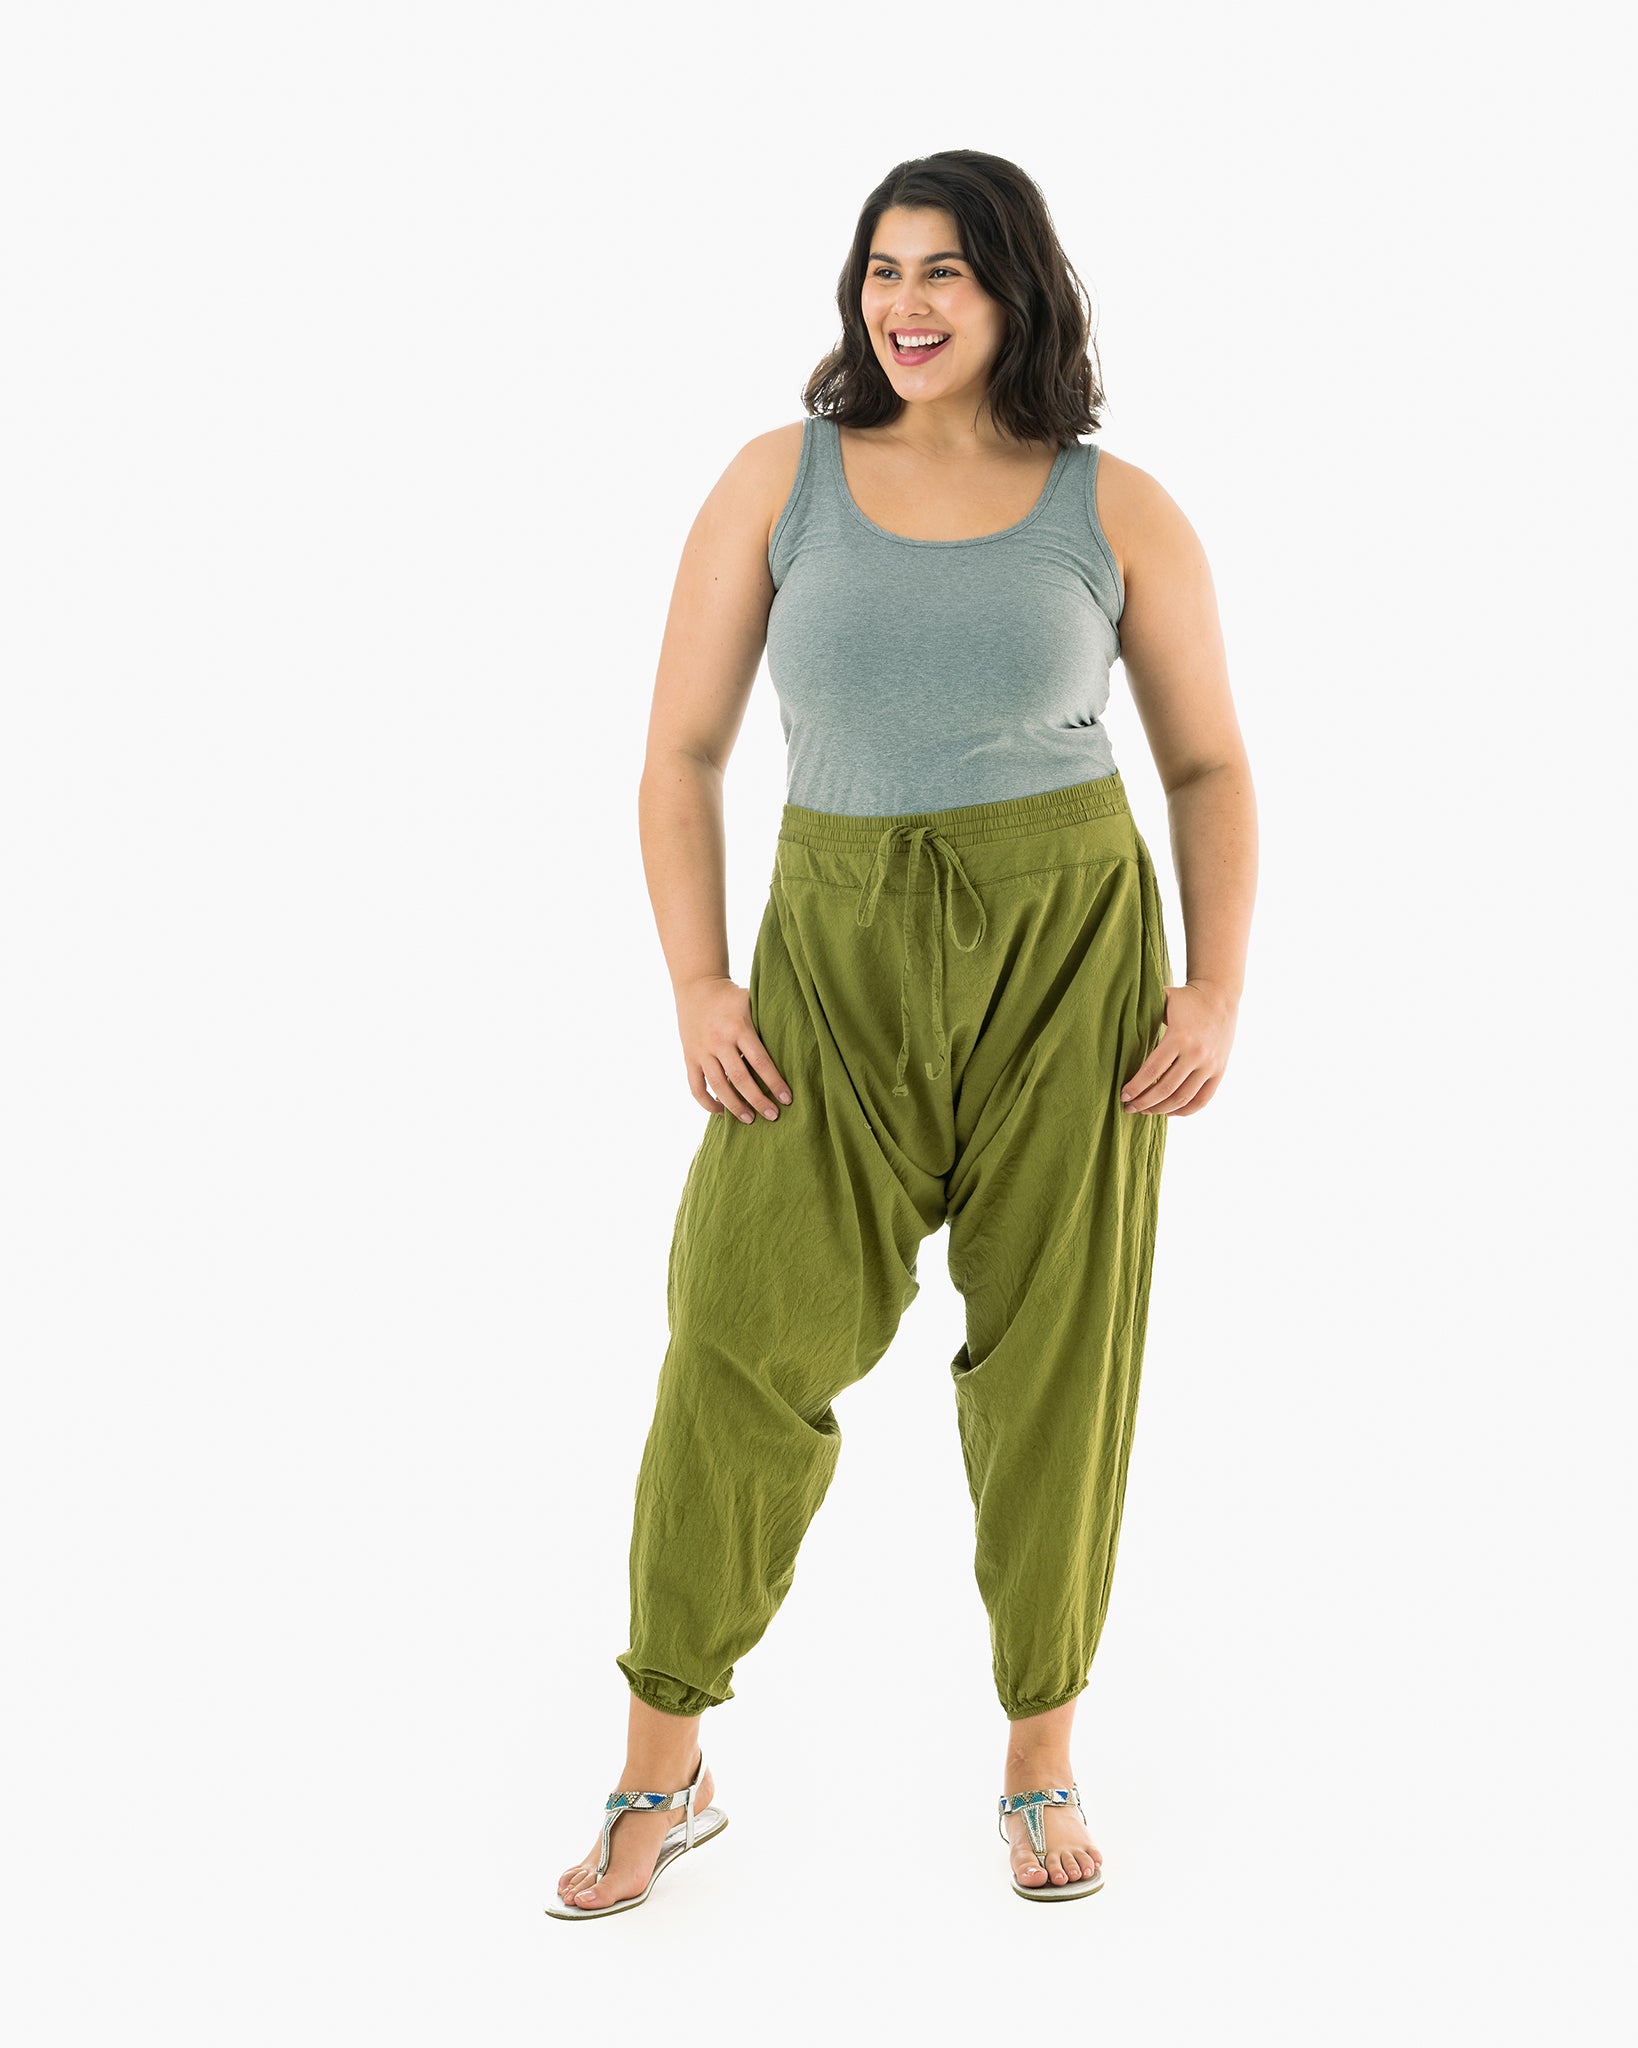 Plus Size Yoga Leggings Wholesale Yoga Pants Plus Size Women Yoga Wear -  China Yoga Wear and Yoga Pants price